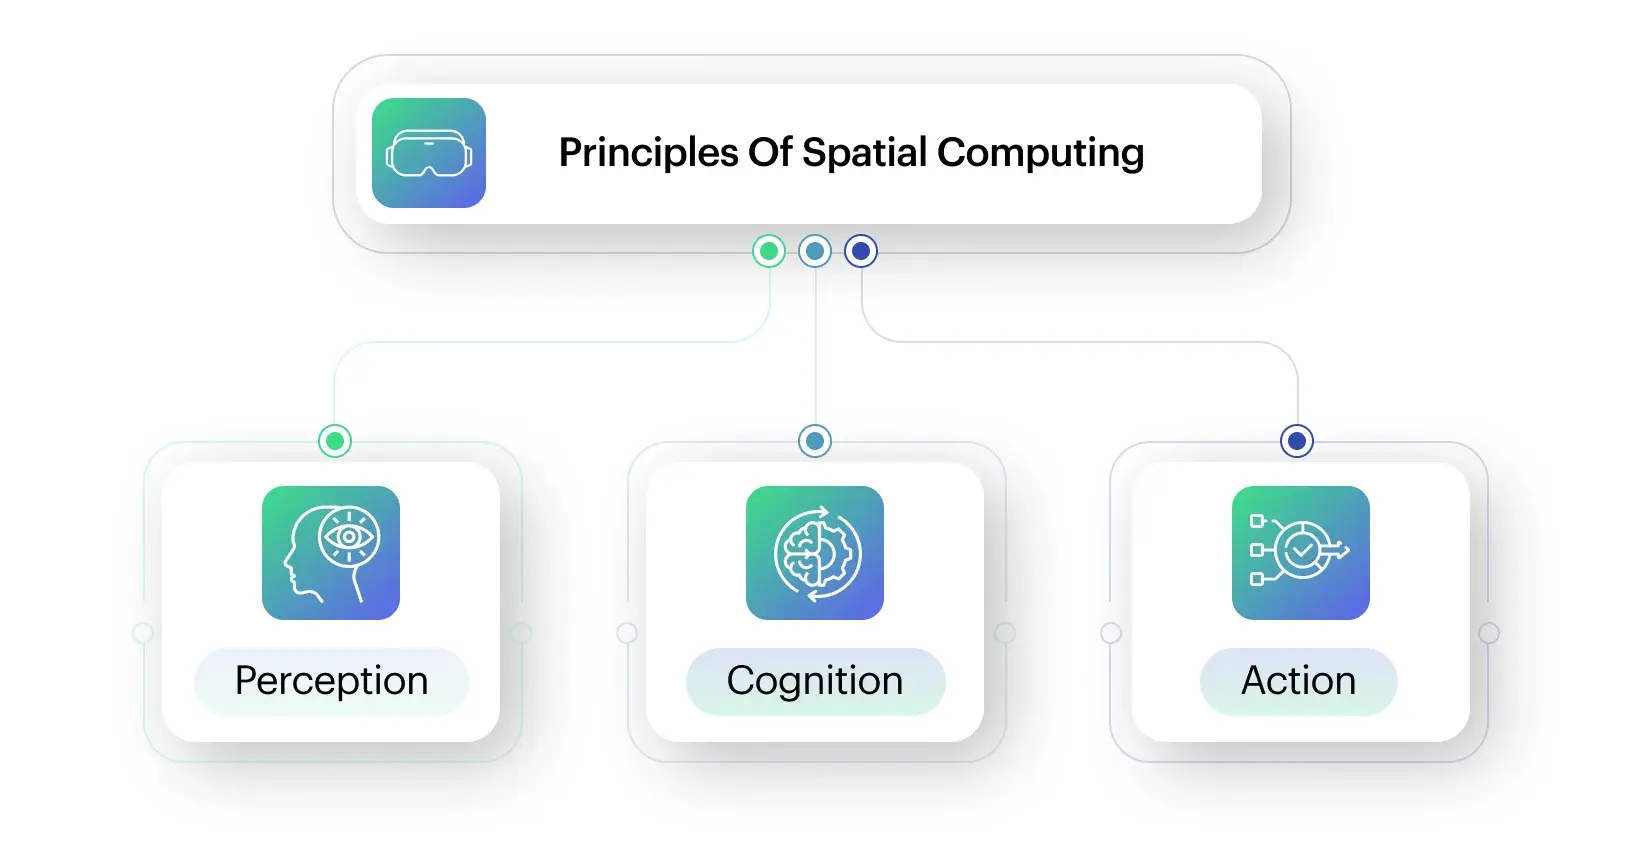 Principles of spatial computing